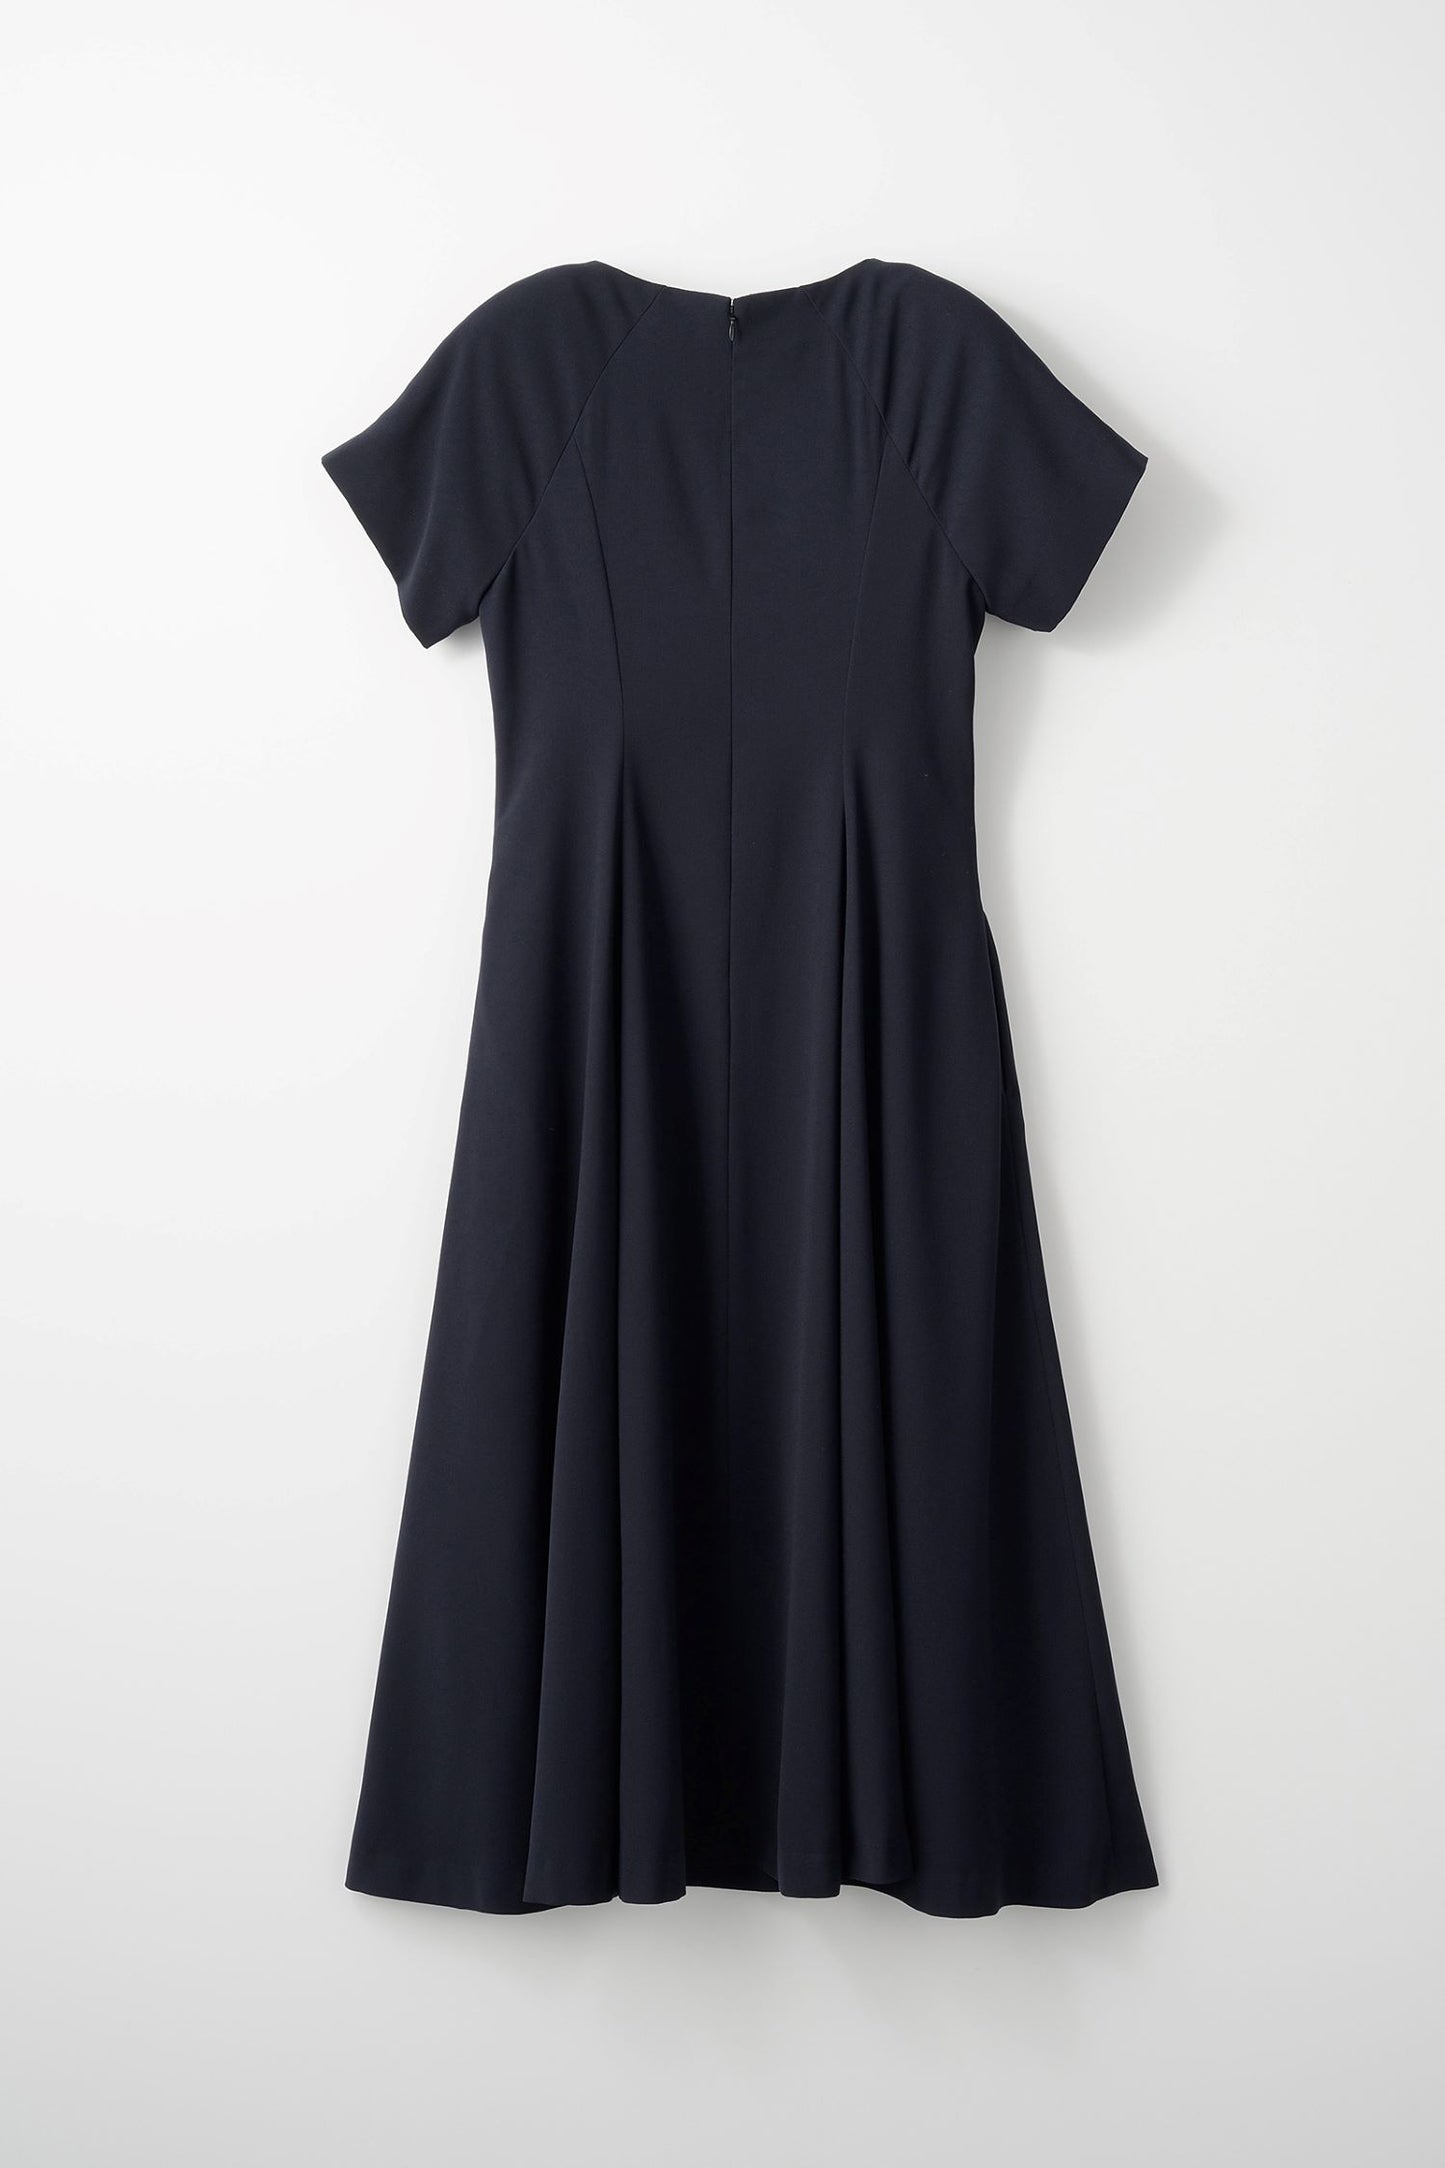 Mulch volume flare dress (Navy)